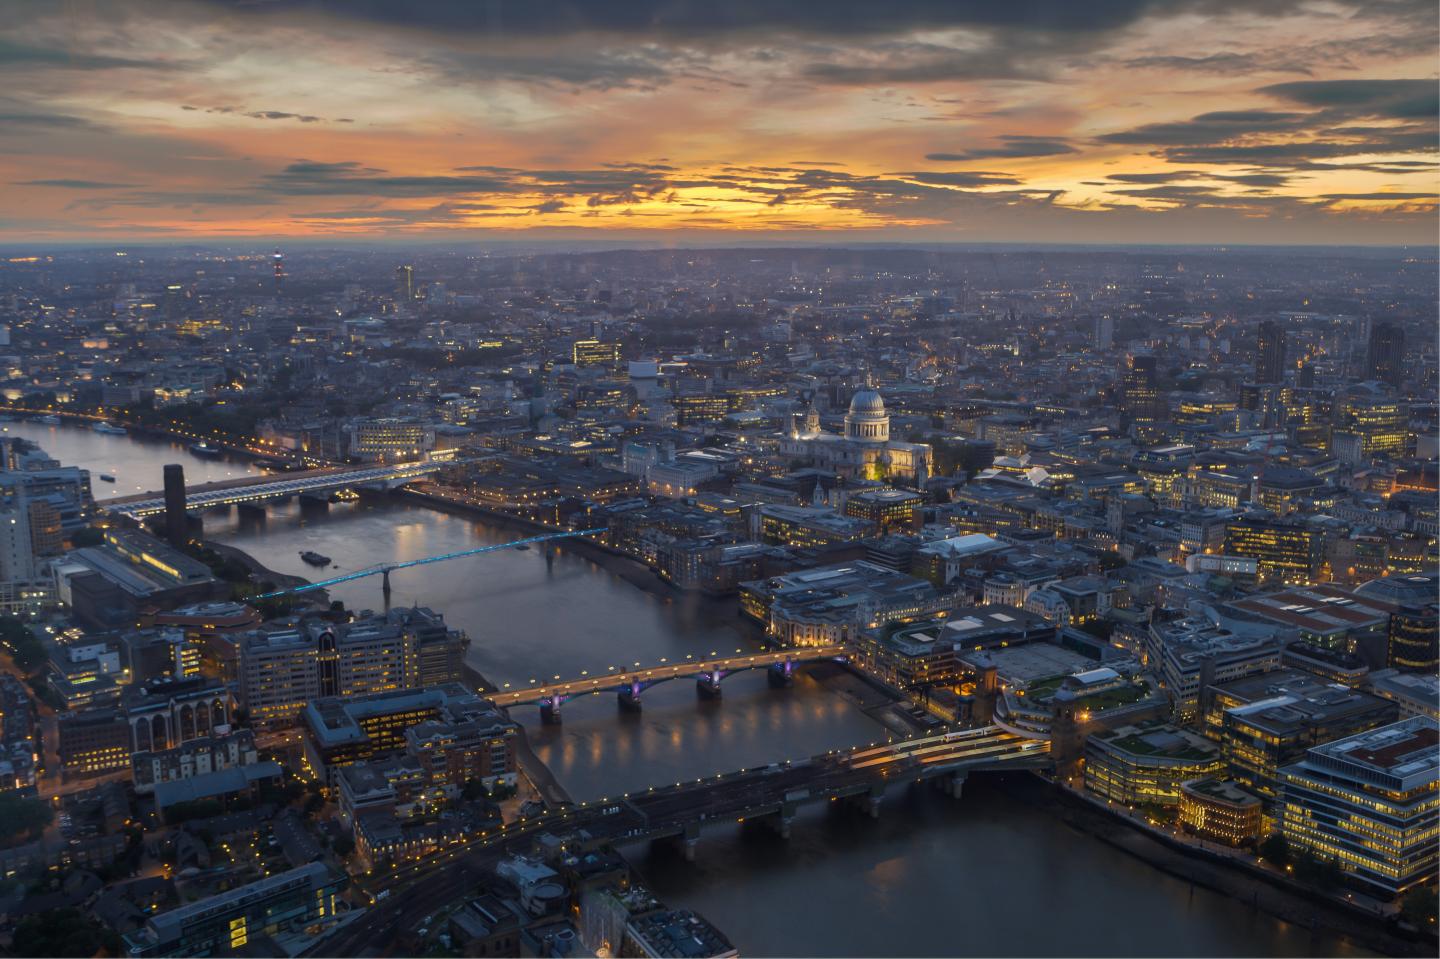 Aerial image of River Thames and bridges at dusk